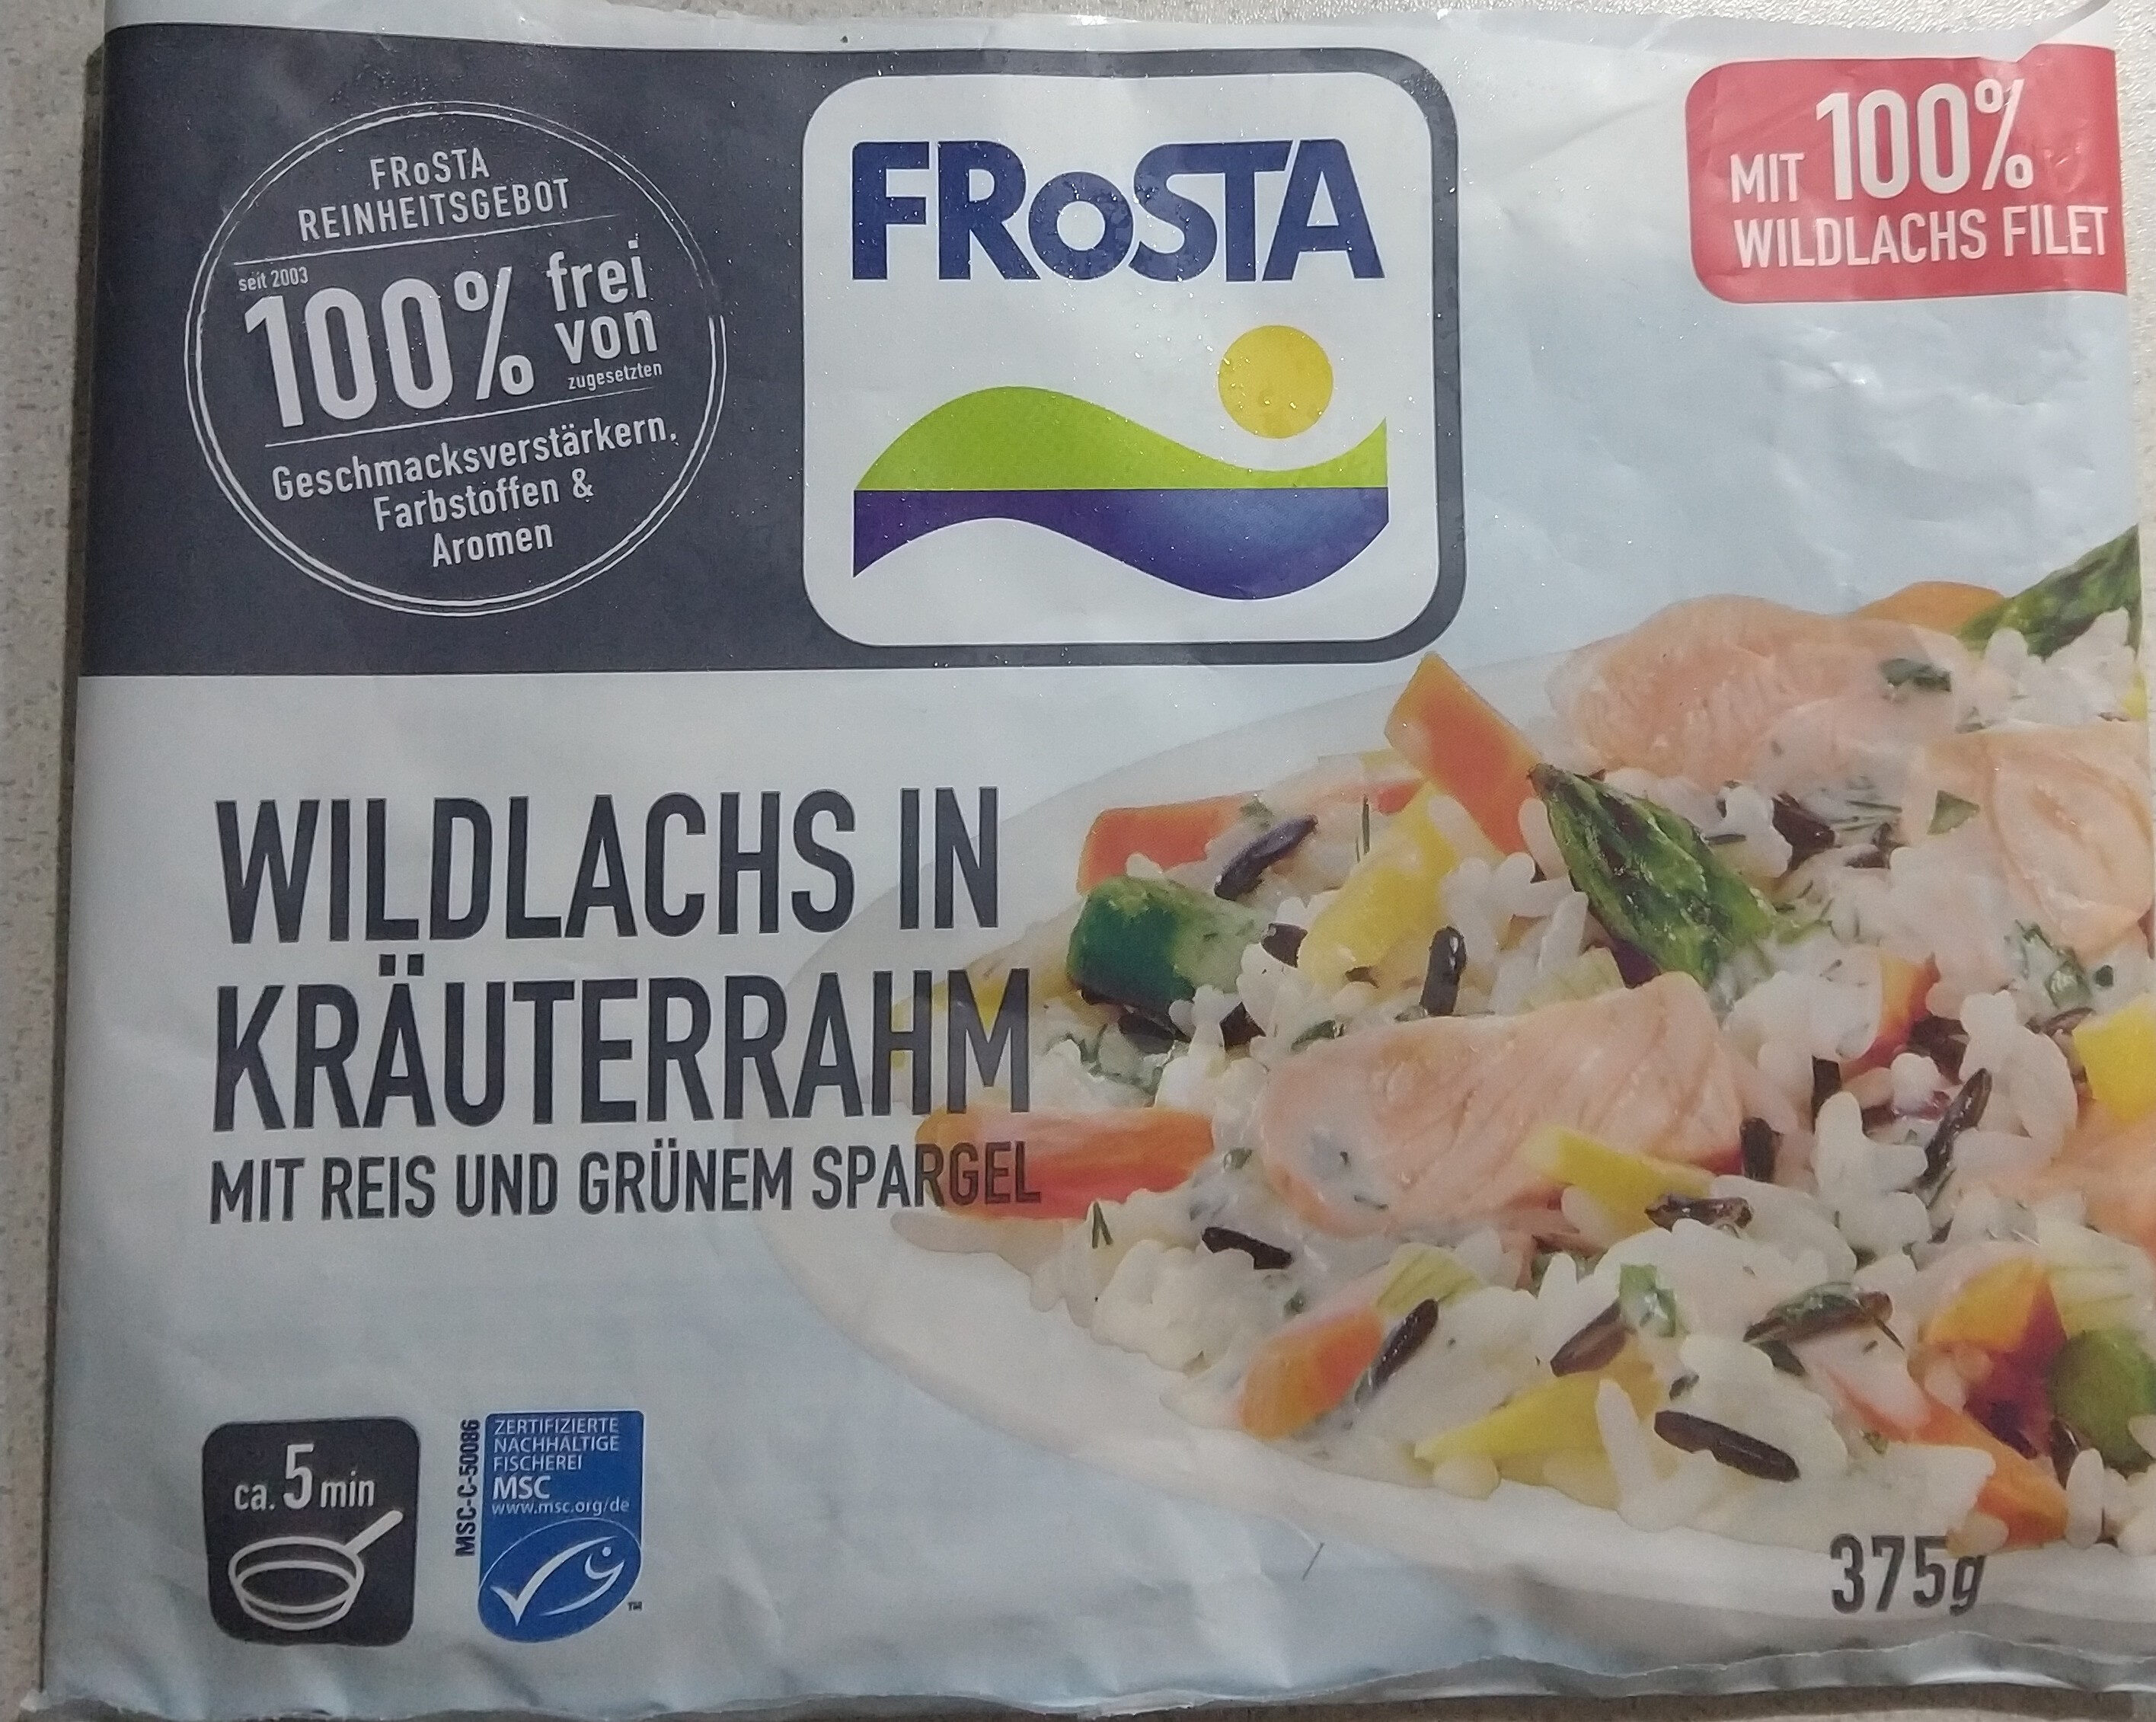 Frosta wildlachs in kräuterrahm - Product - de